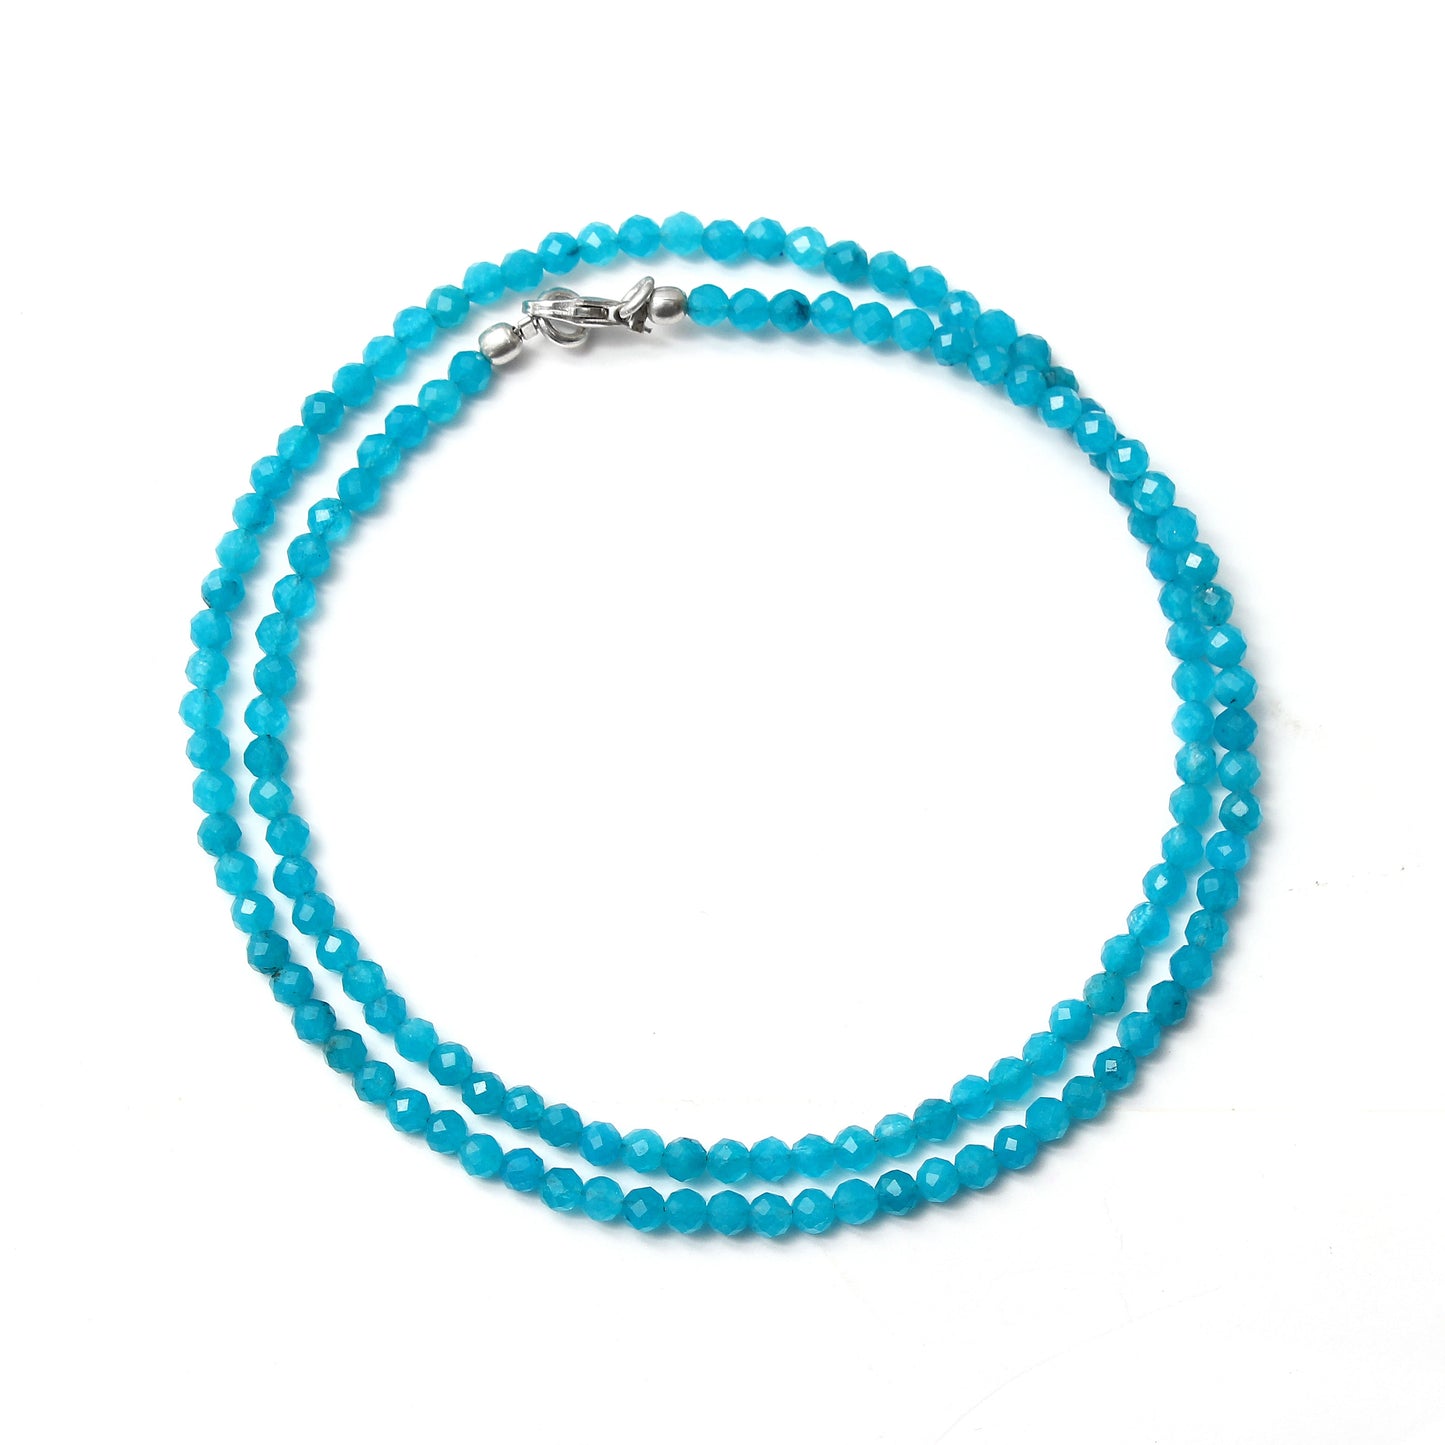 Beautiful Blue Quartz Beaded Necklace, Blue Quartz Micro Faceted Round Beads Necklace, Quartz Bead Jewelry, GemsRush